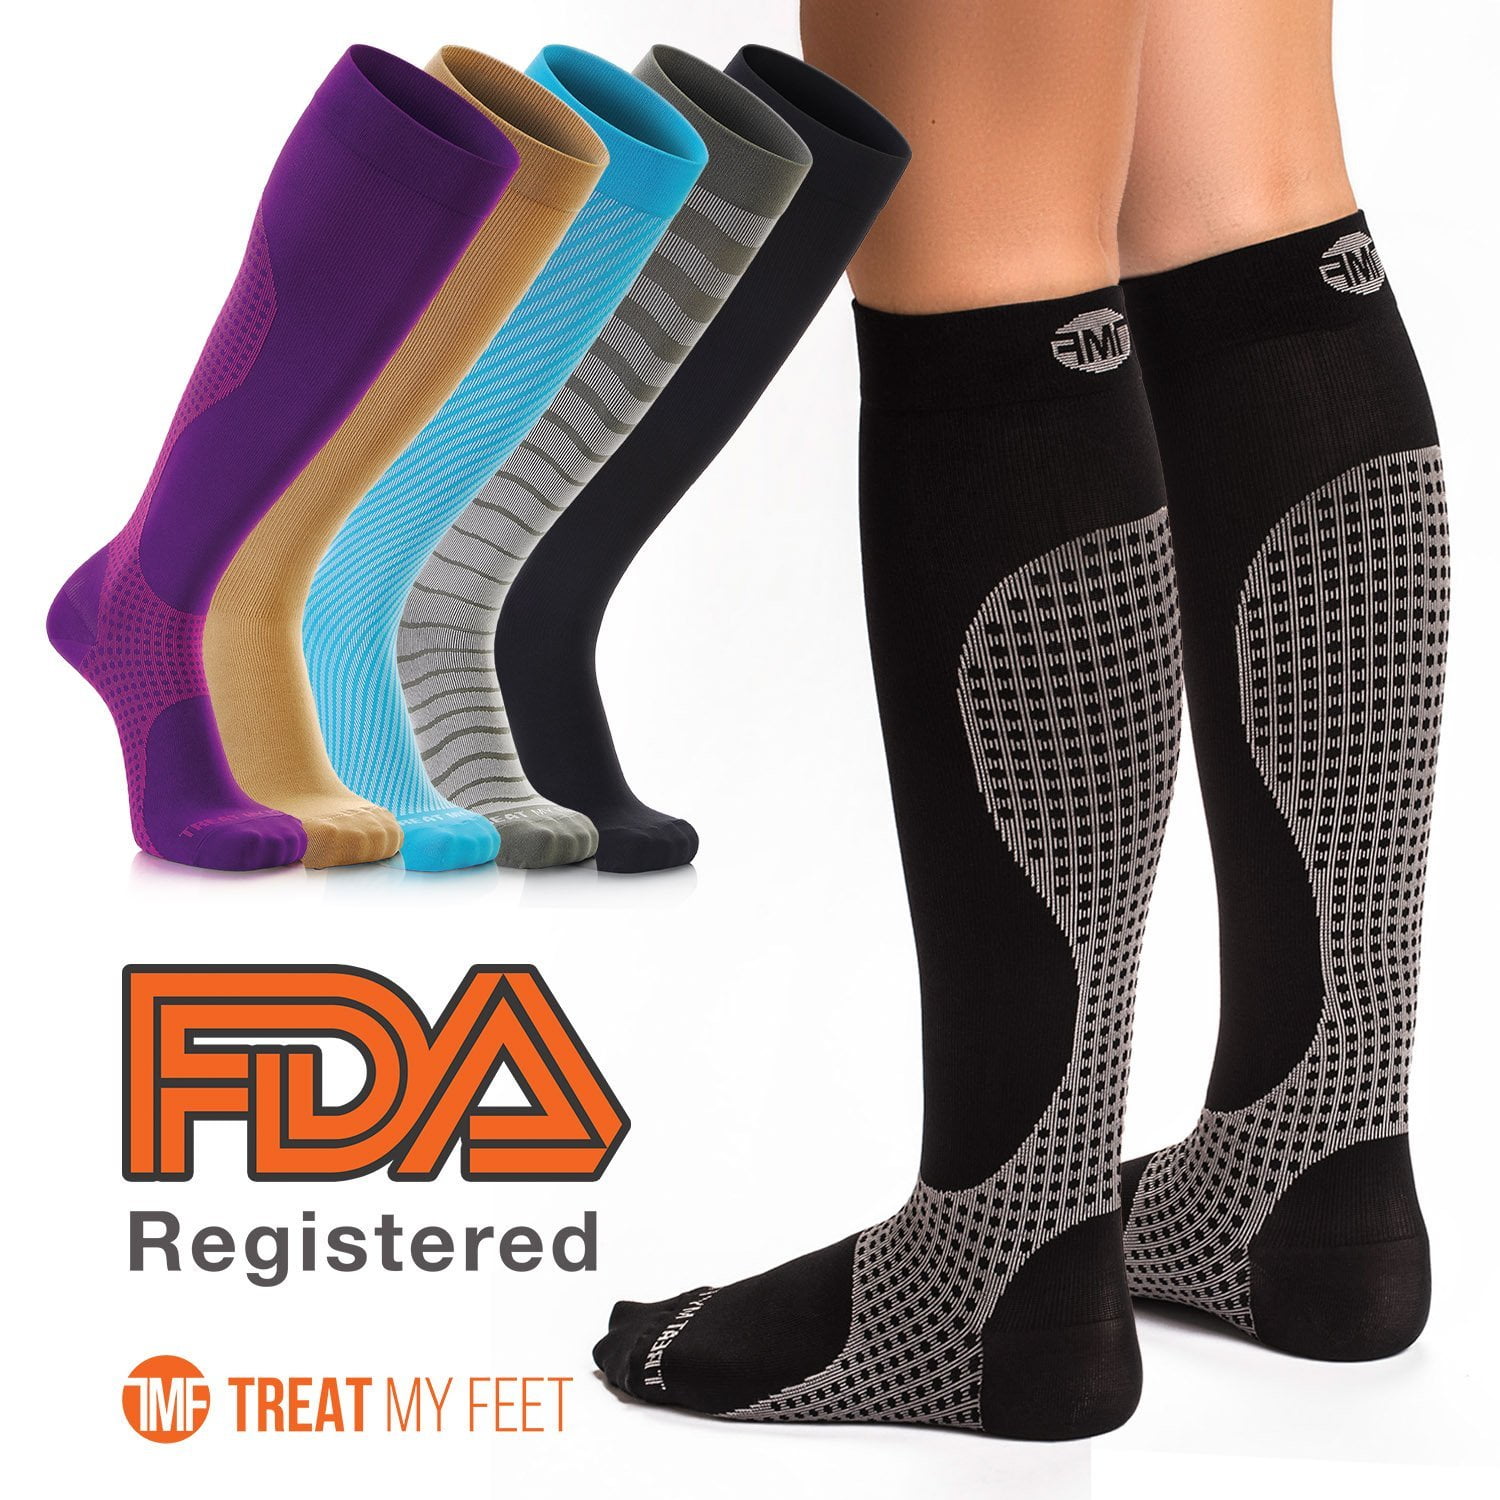 Man Compression Travel Socks Running Anti Swelling Circulation Comfortable Legs 